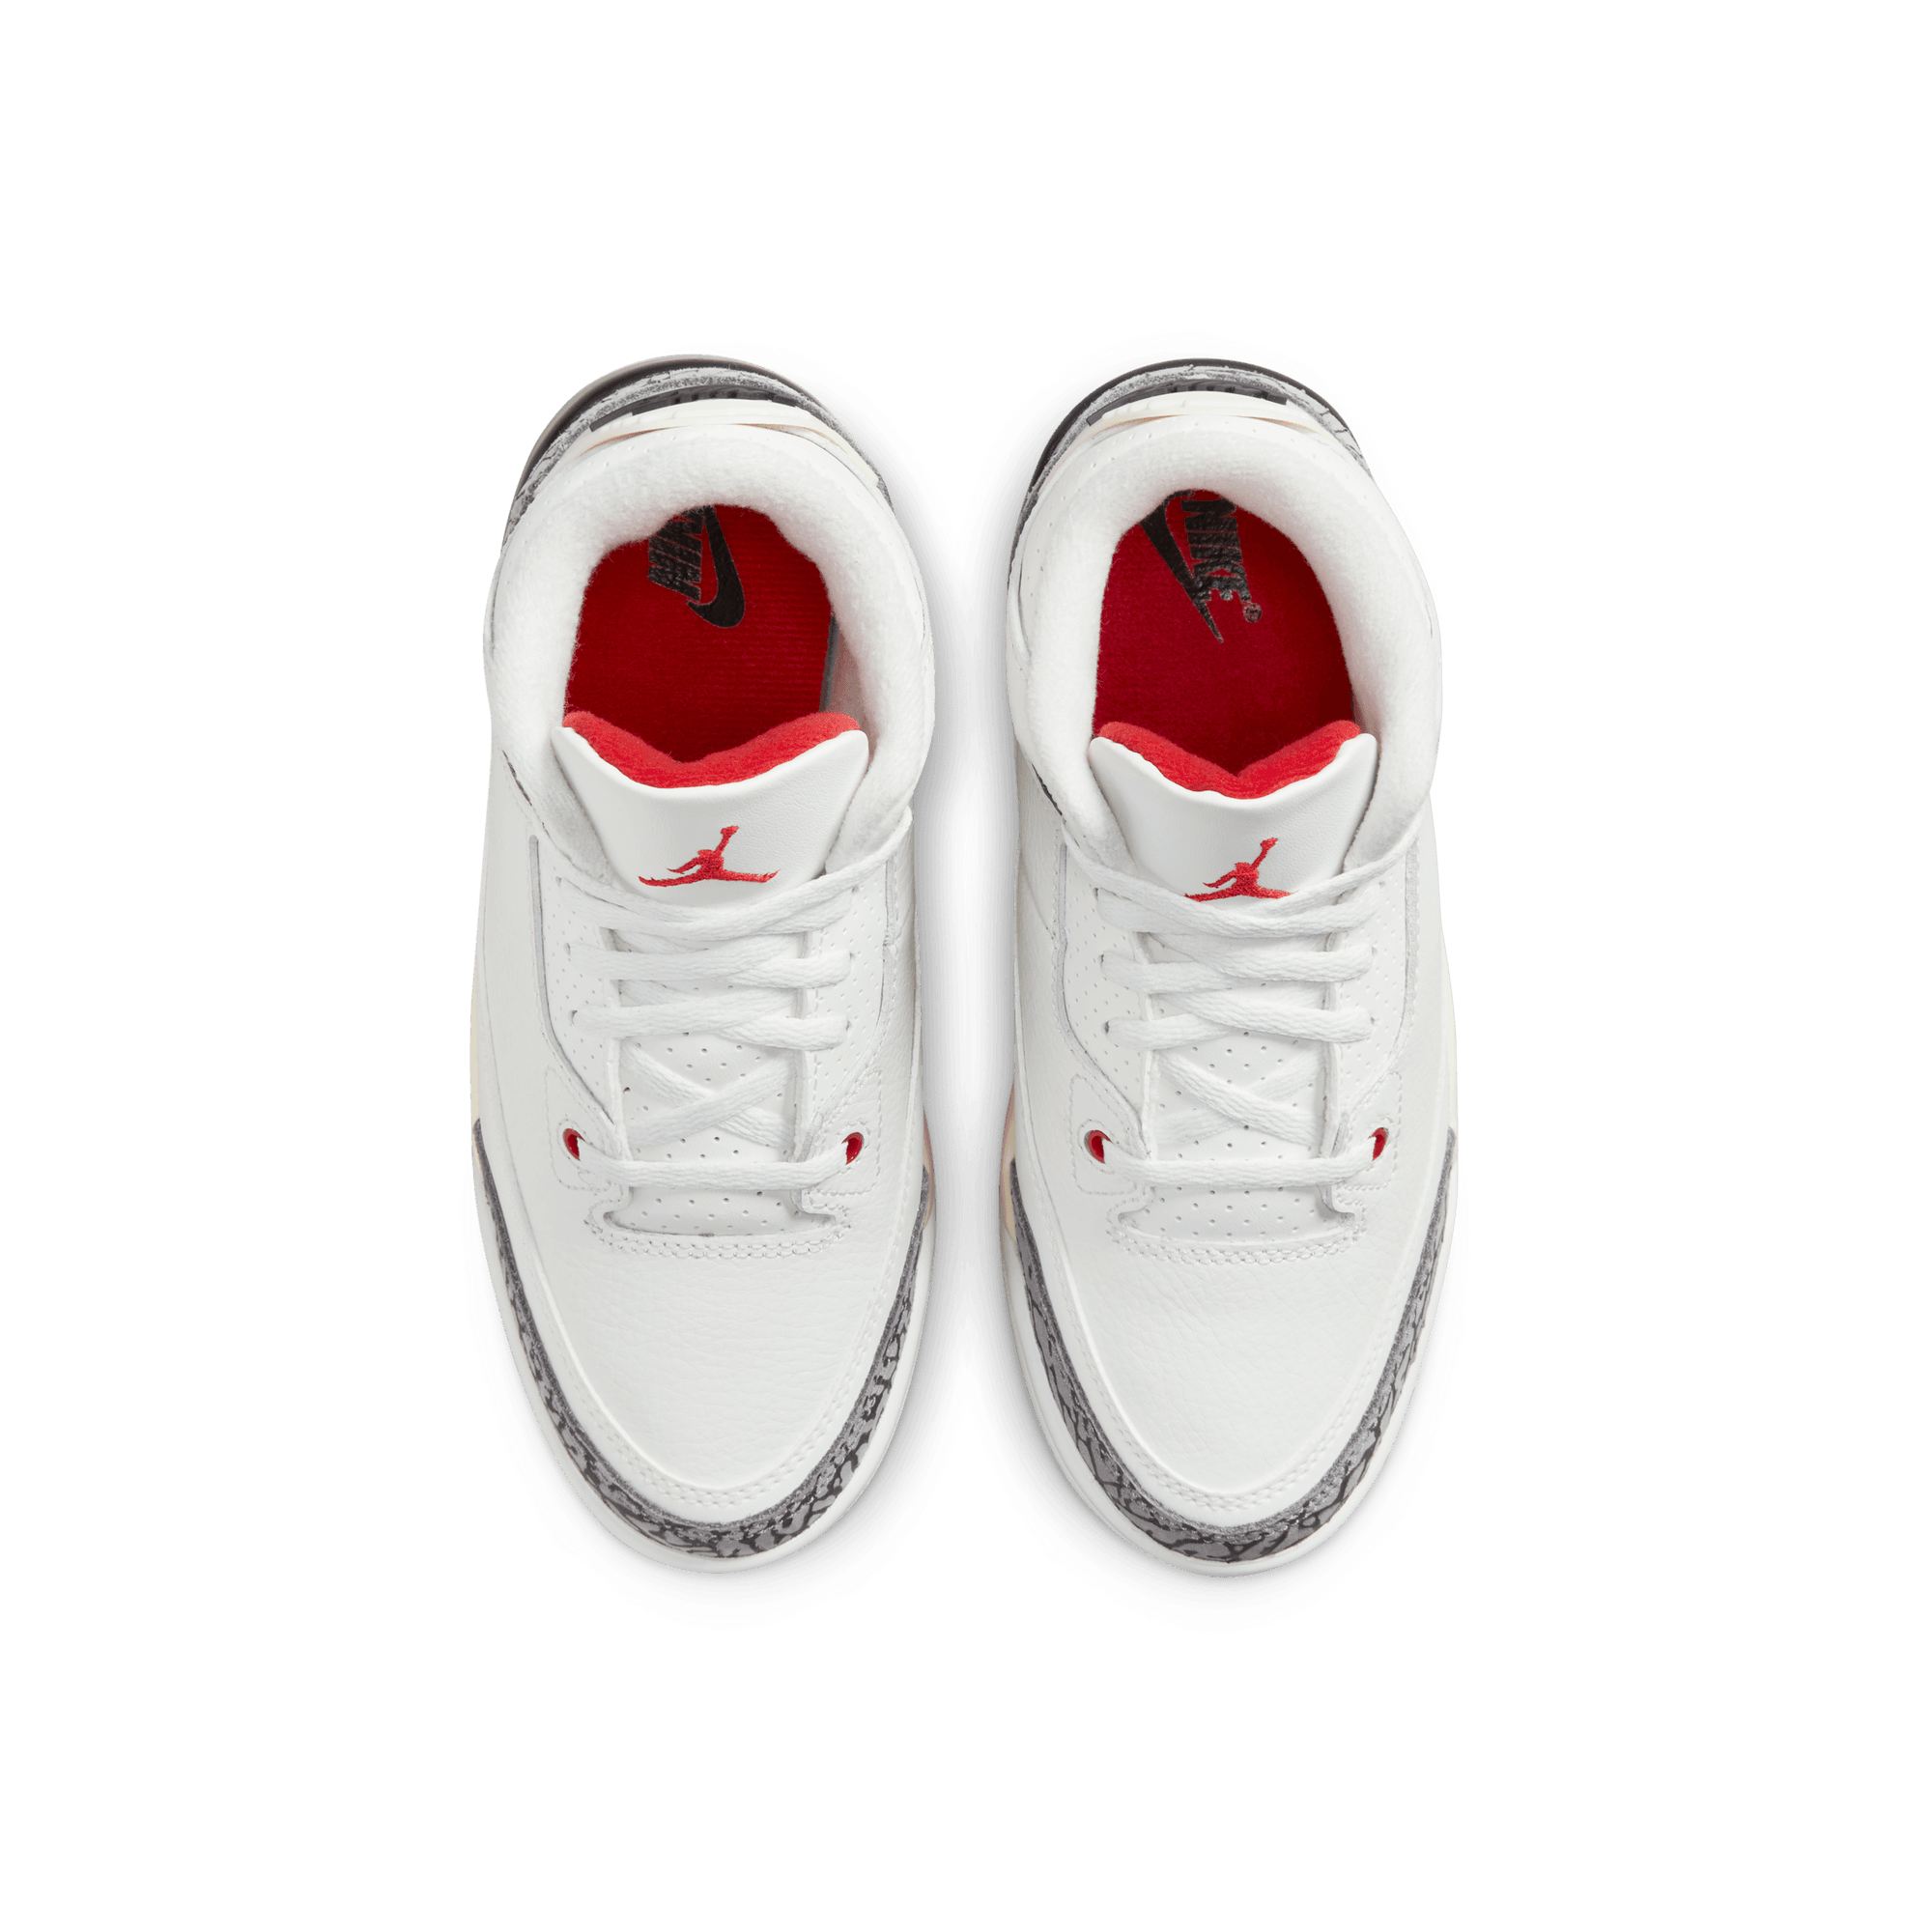 AJ Air Jordan 3 Retro - Preschool